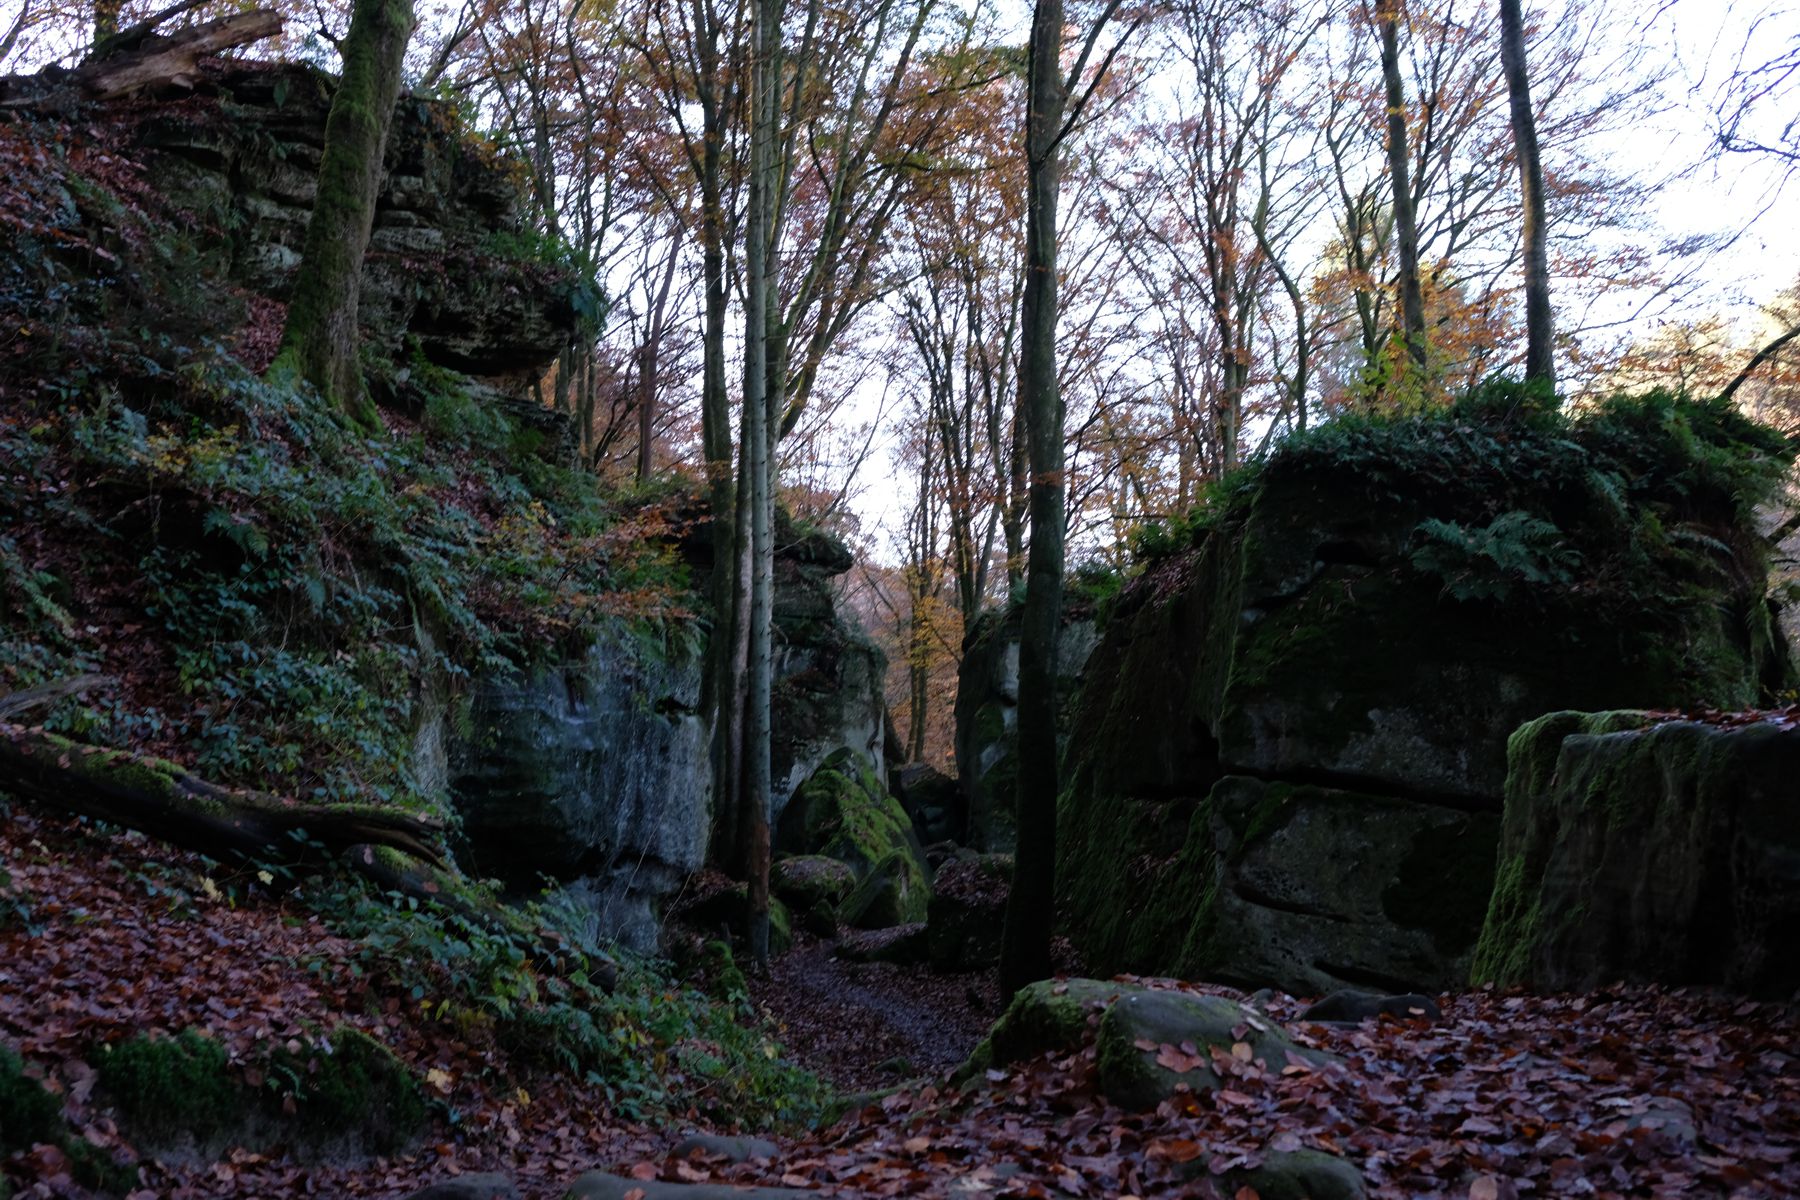 Echternach E1 trail - stone outcropping